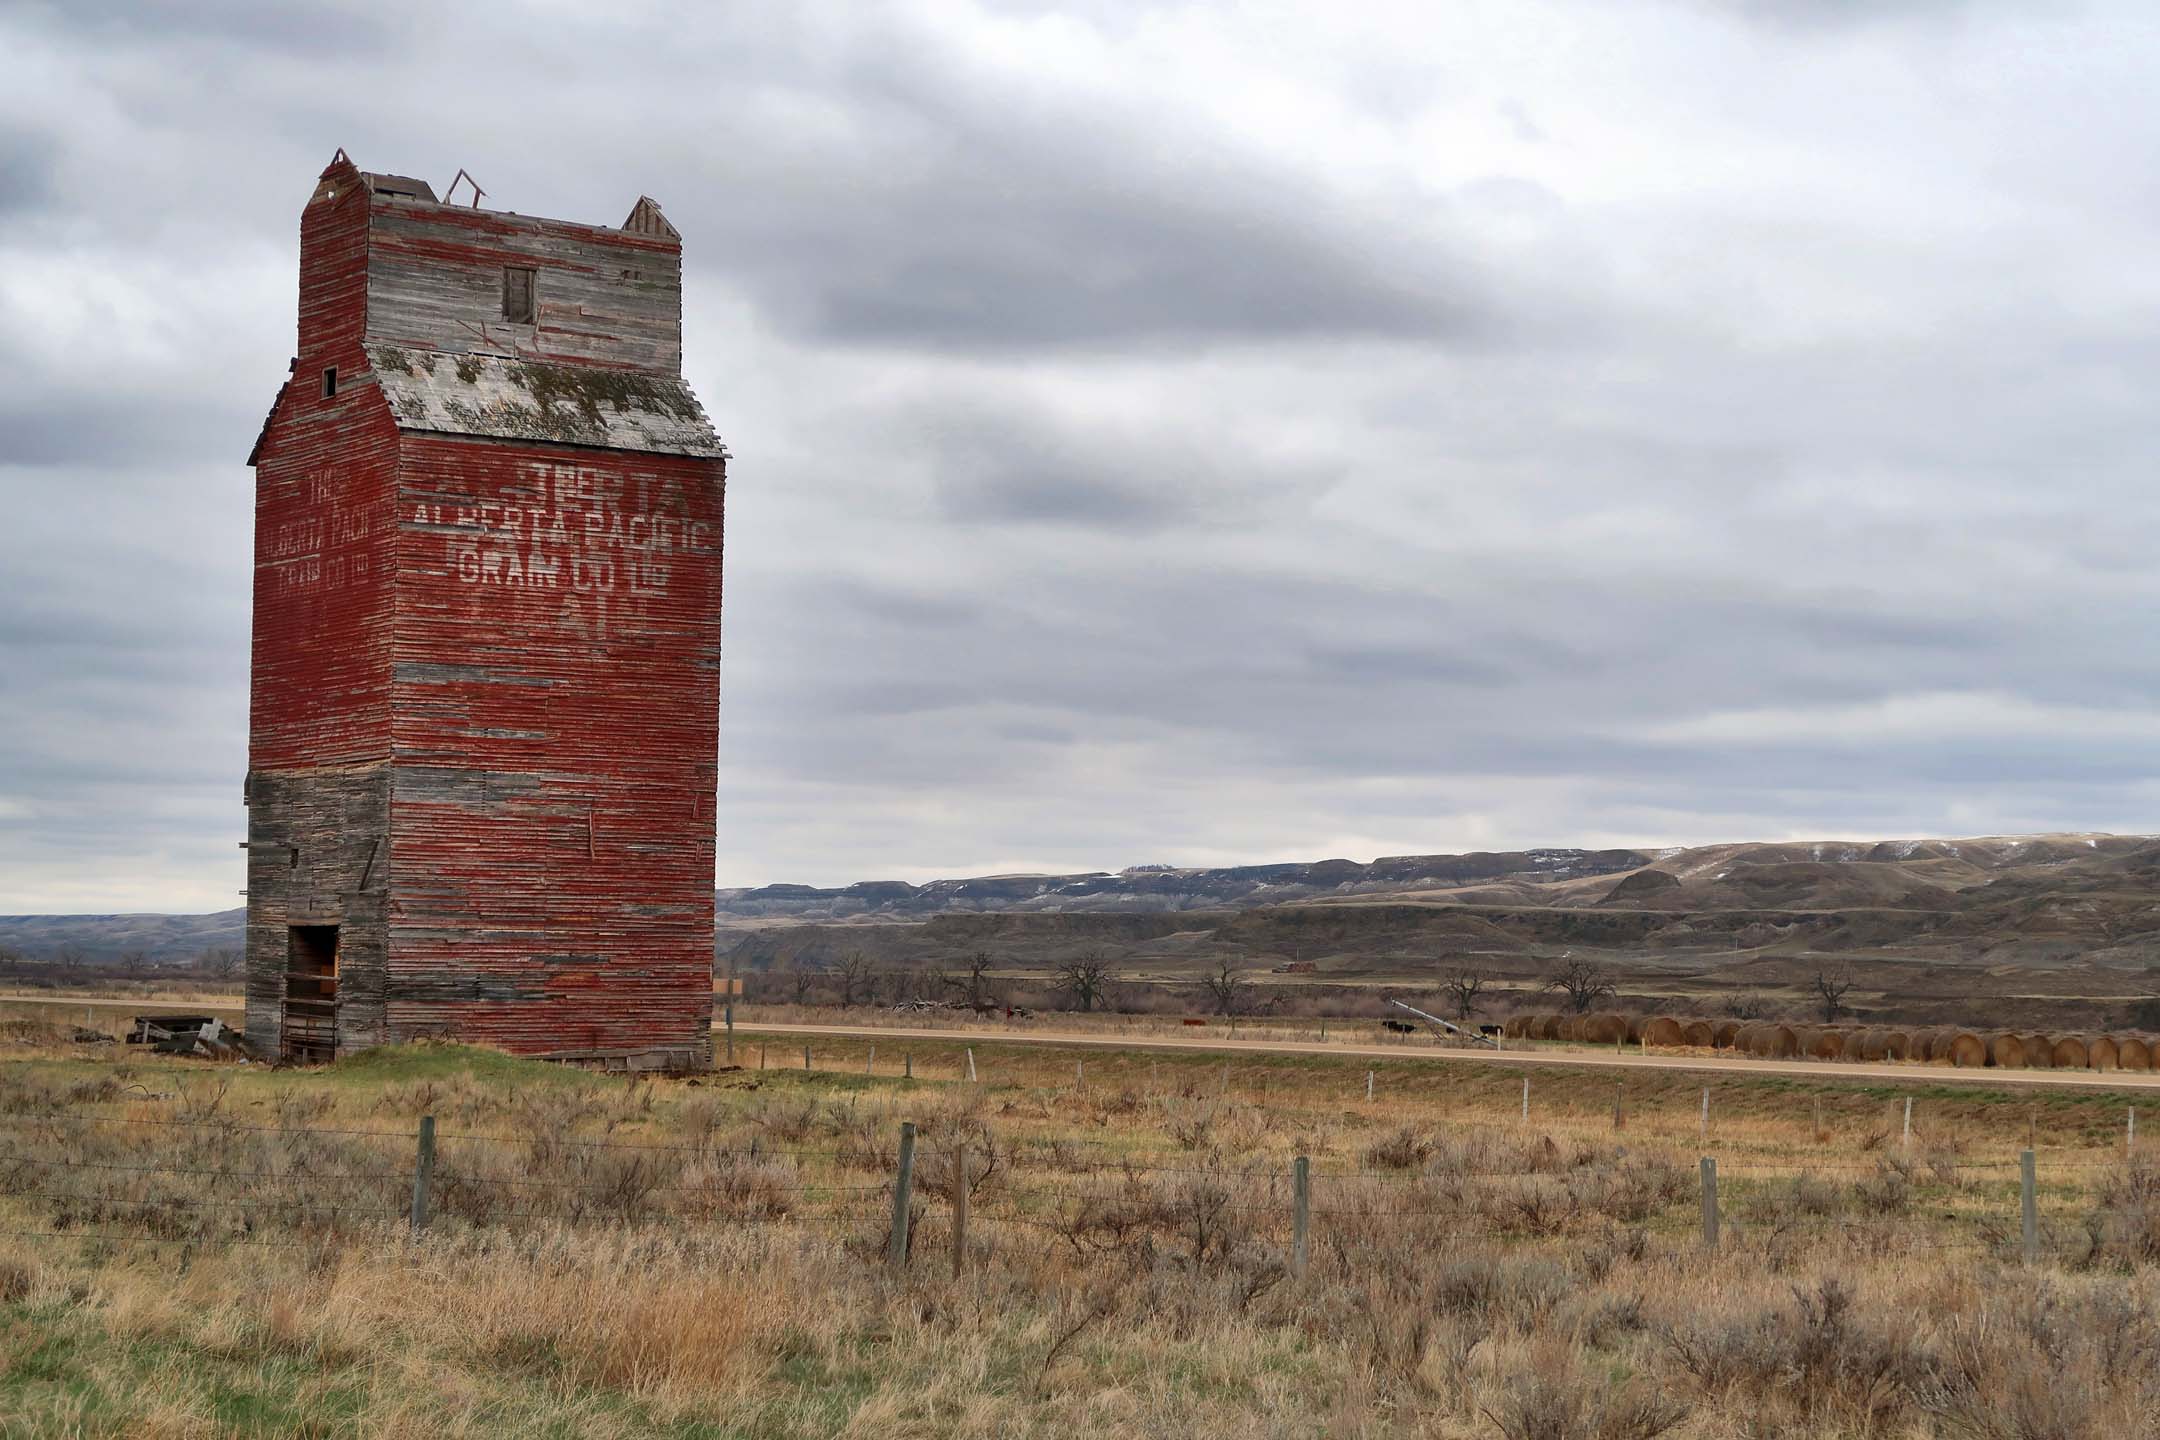 The Alberta Pacific Grain Elevator in Dorothy